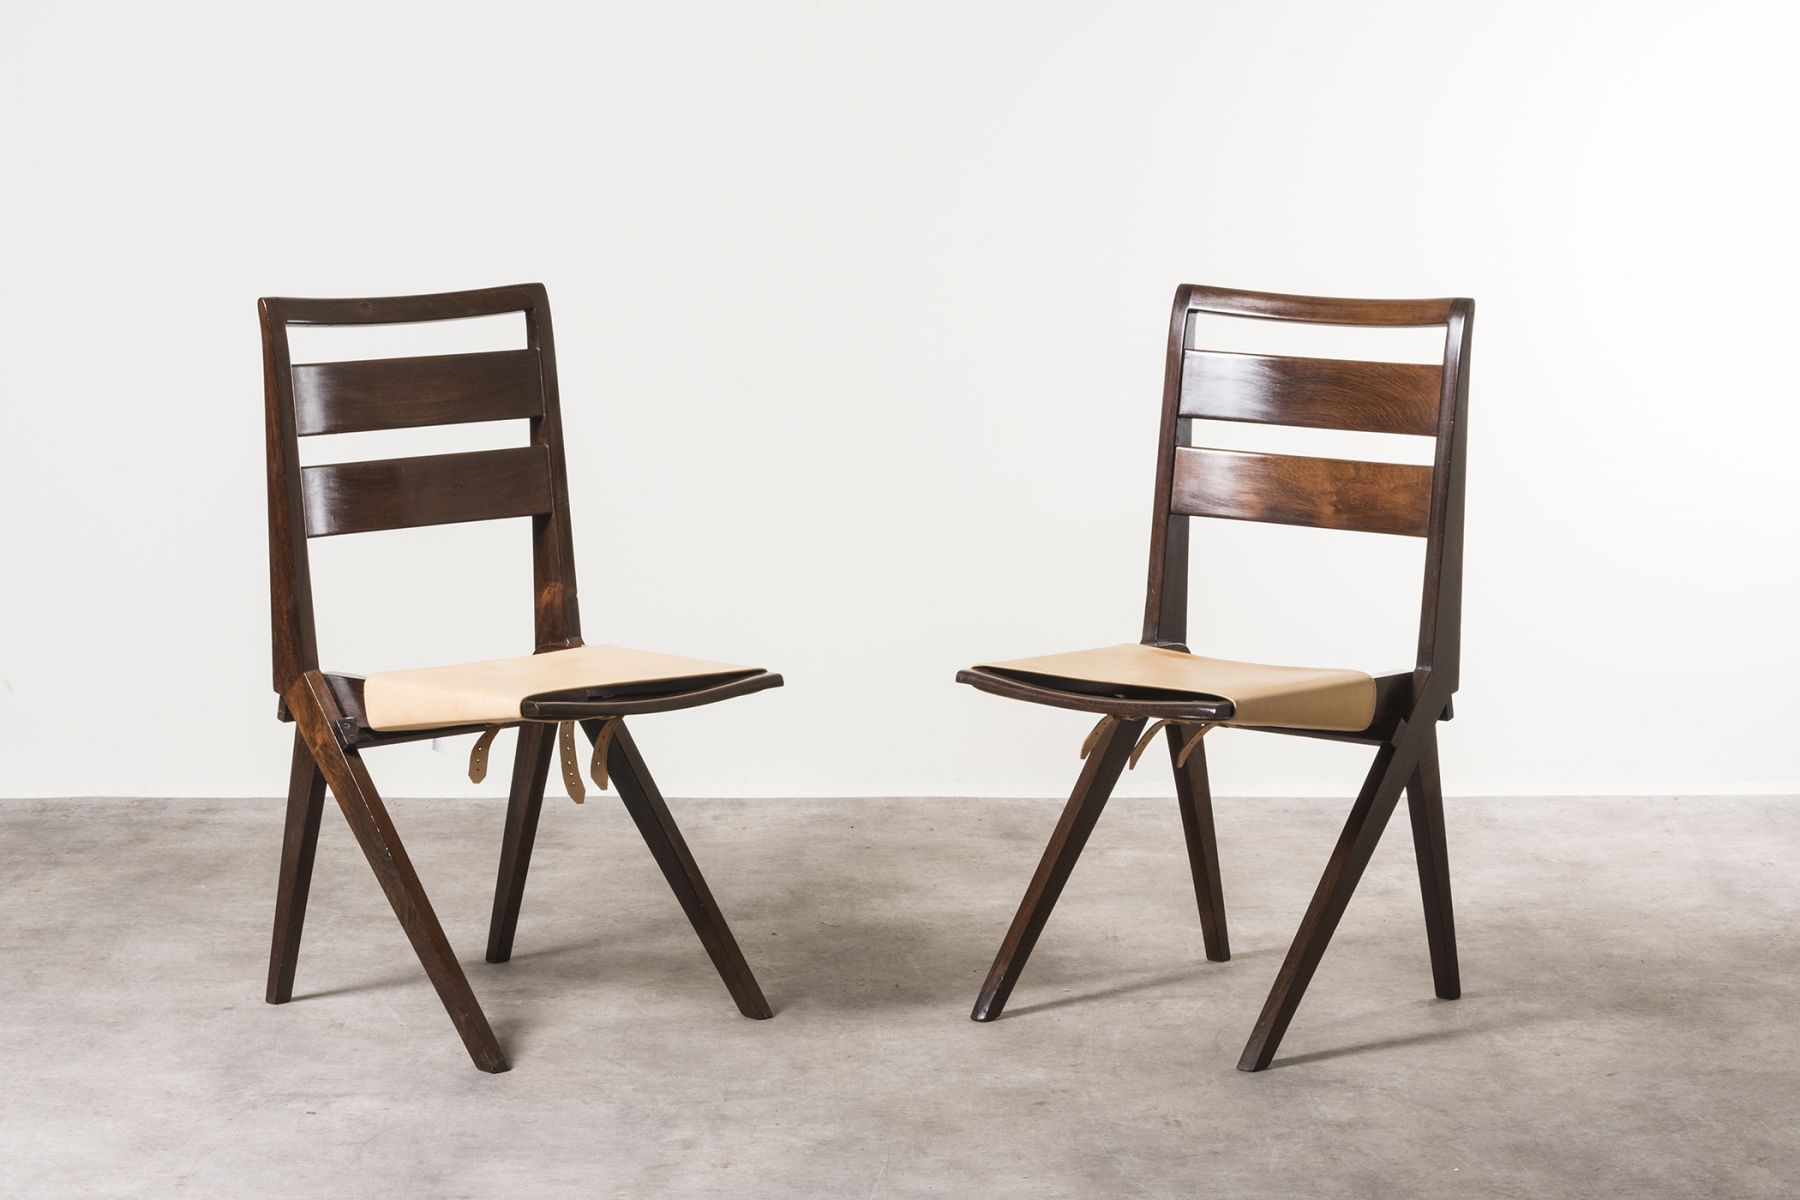 Two MASP chairs ‐ Folding and stackable chairs Lina Bo Bardi, Giancarlo Palanti: Studio d'Arte Palma  pic-1